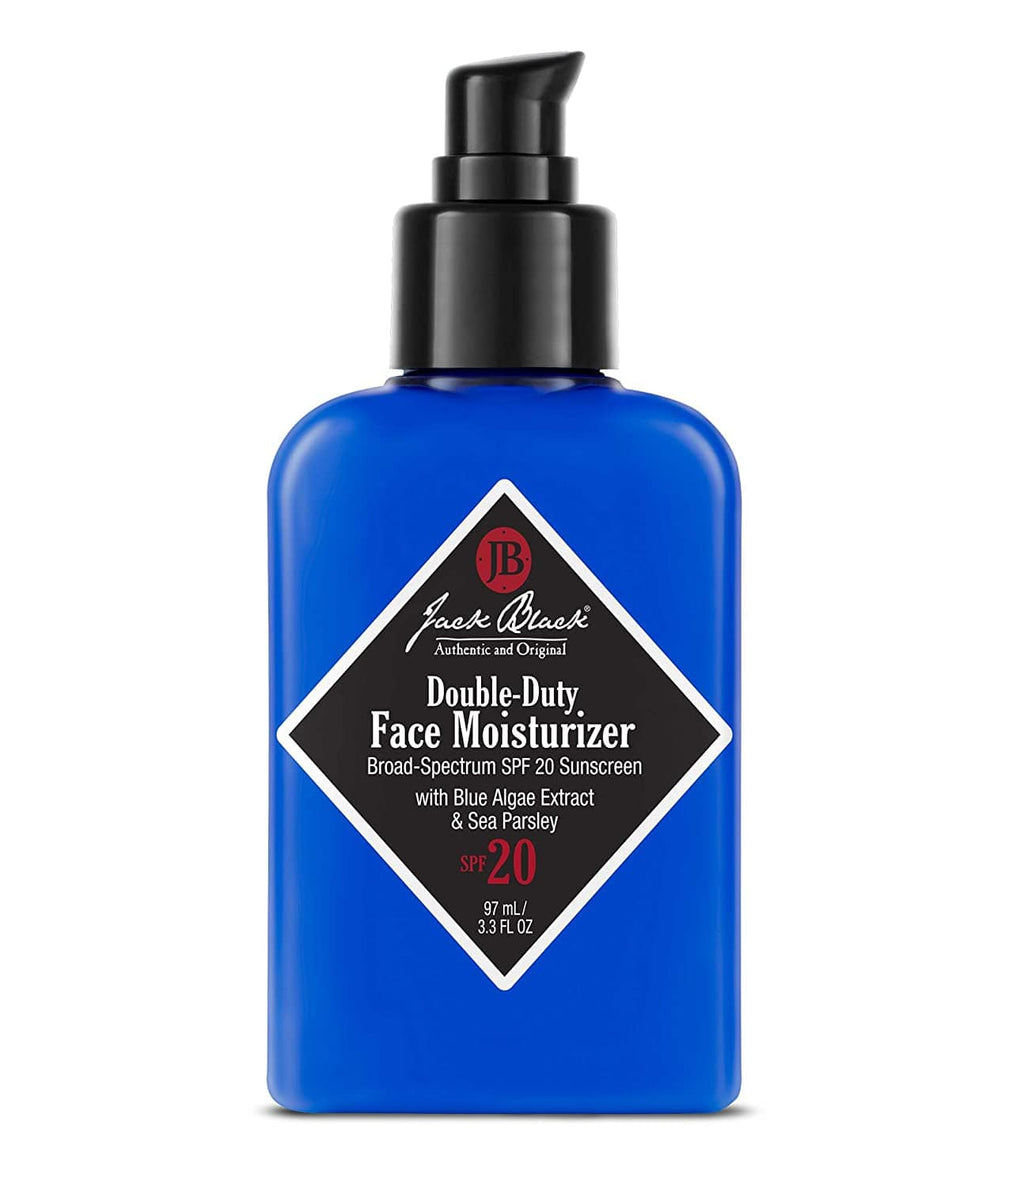 Jack Black Face Moisturizer Double-Duty Face Moisturizer SPF 20 with Blue Algae Extract & Sea Parsley 3.3 oz